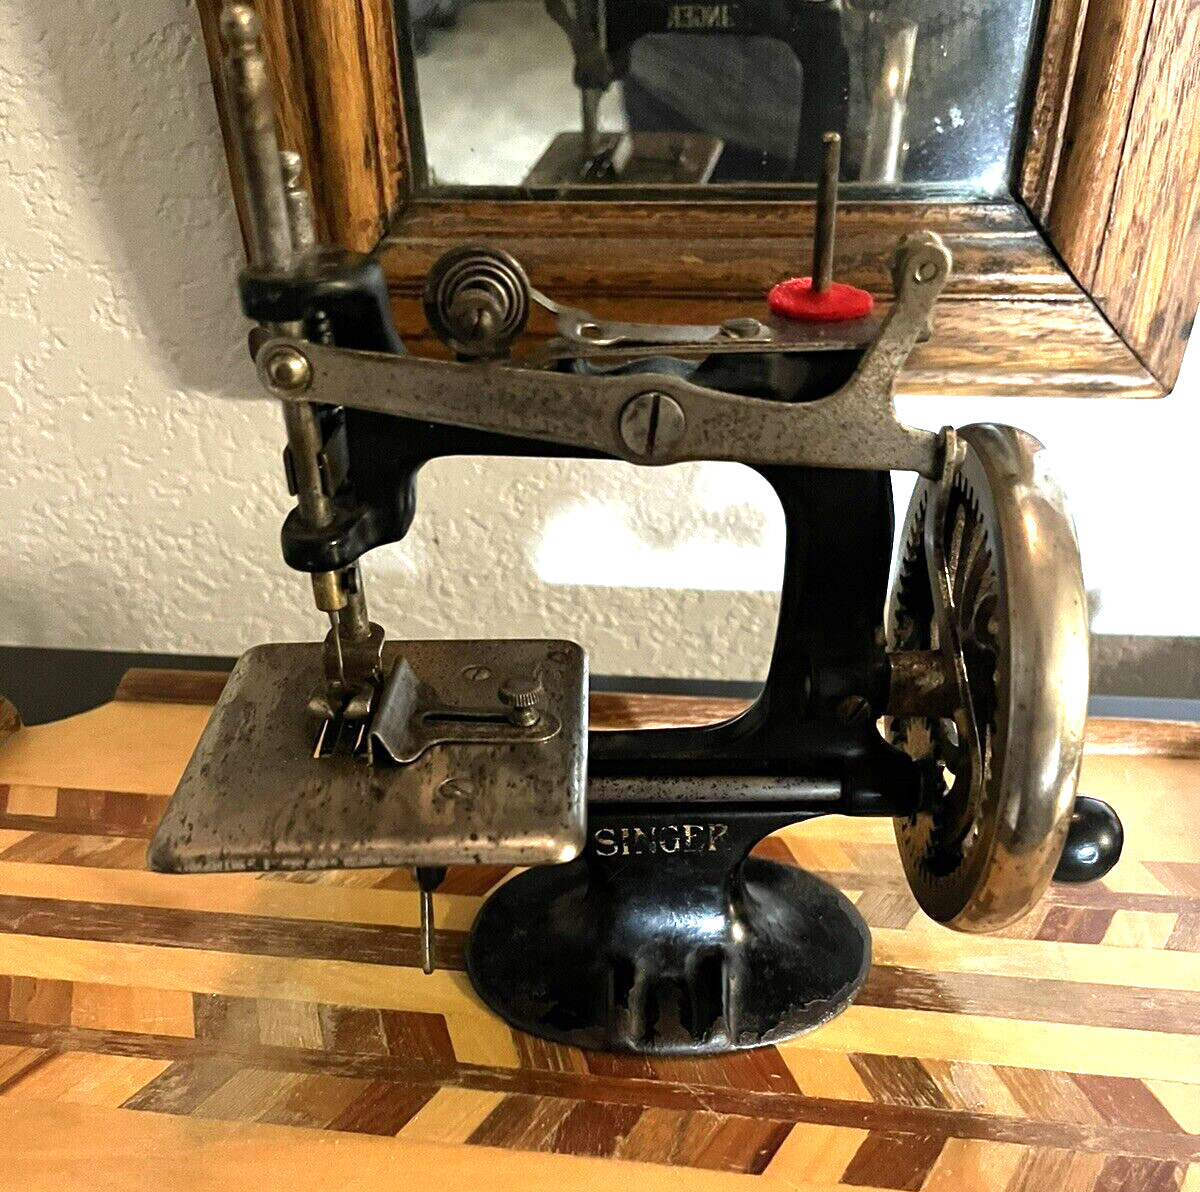 Antique Singer Sewing Machine Model 20-1 - 1914 era, 8 spokes, needs TLC